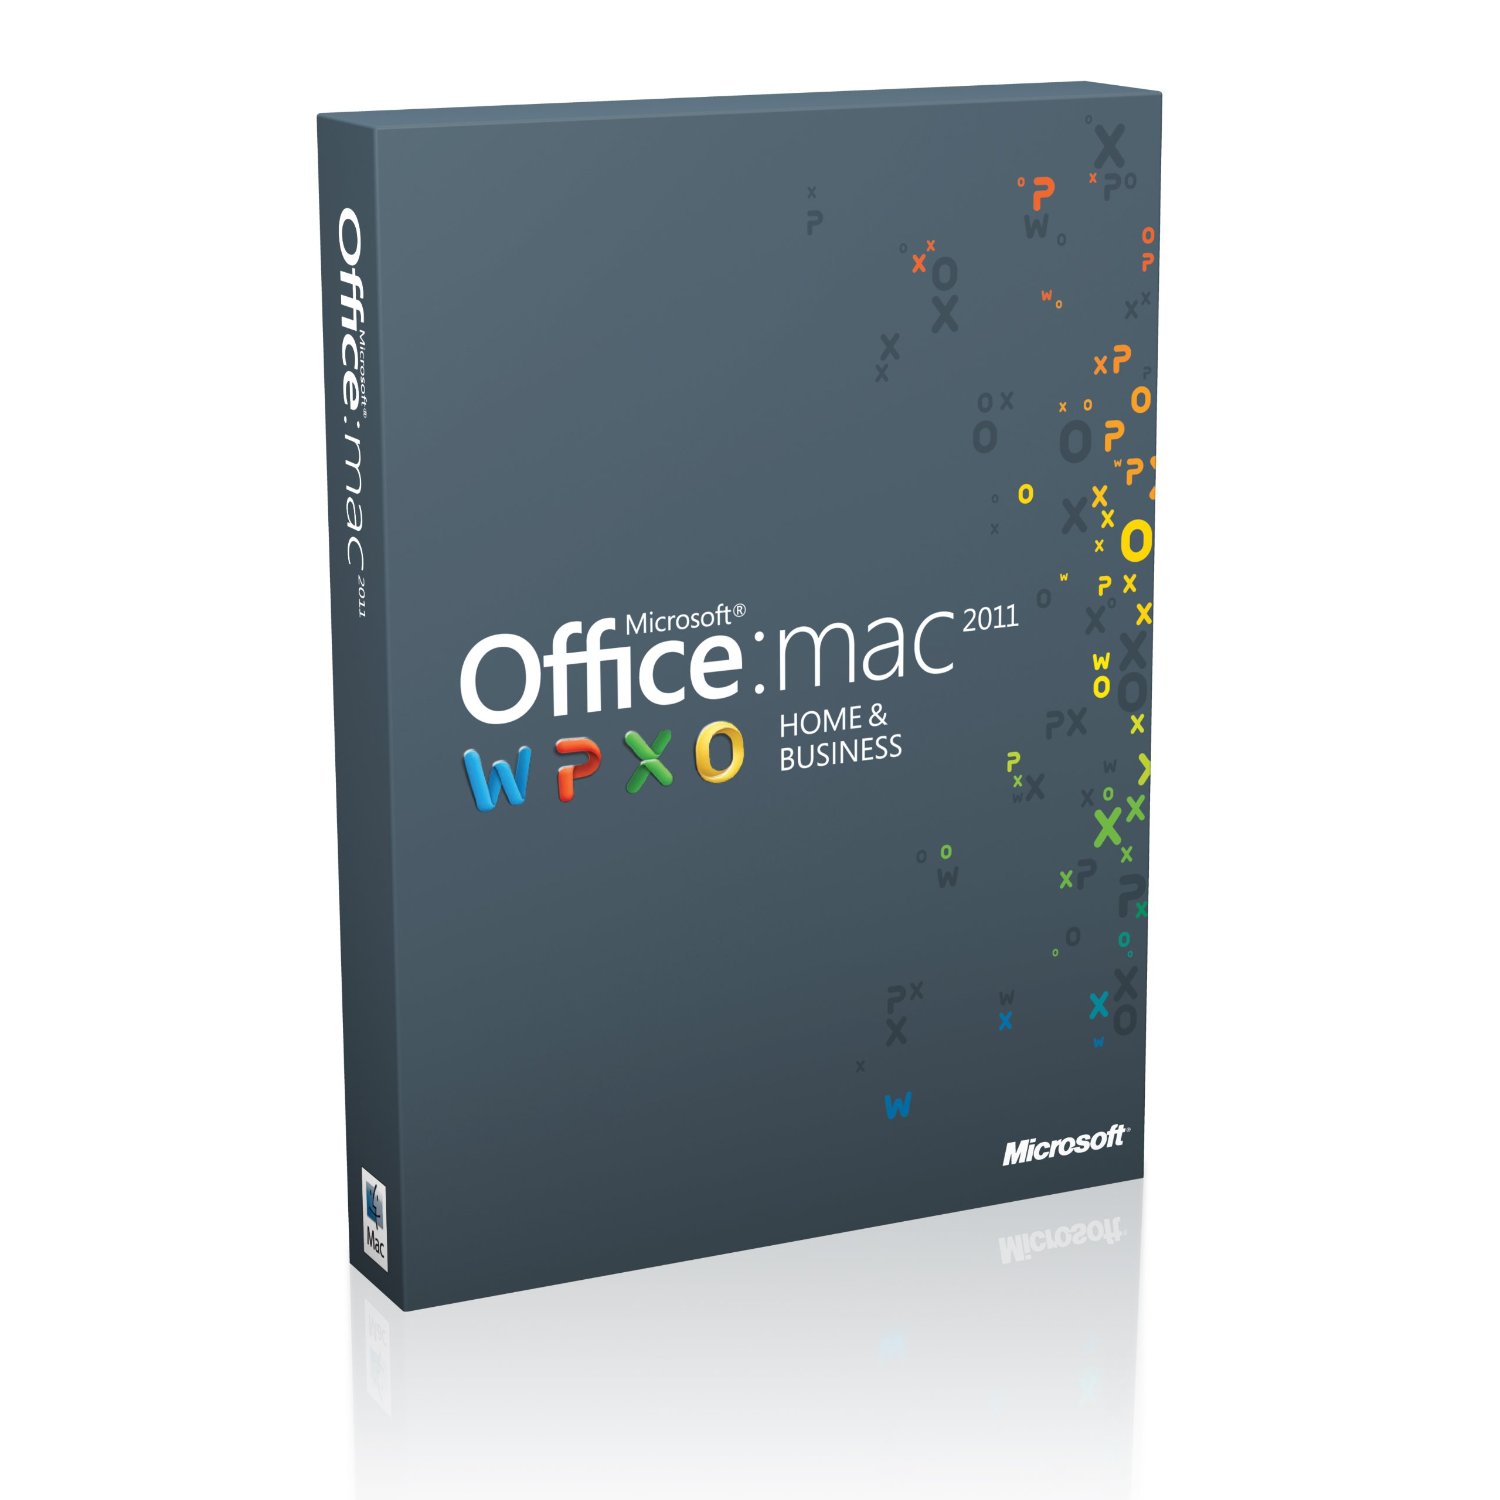 Outlook 2011 for mac setup